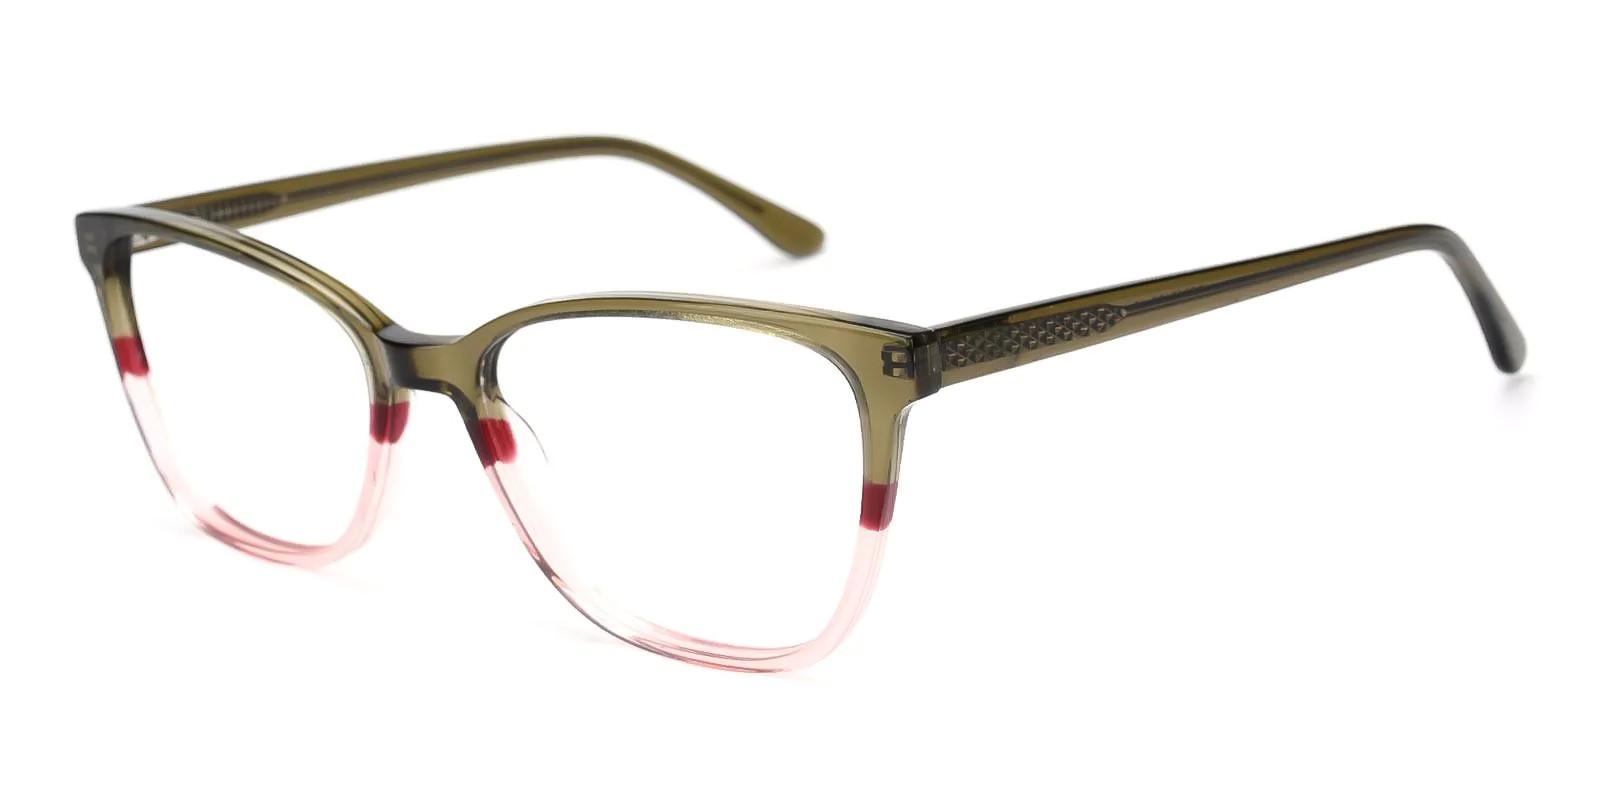 Rosemary Green Acetate Eyeglasses , Fashion , SpringHinges , UniversalBridgeFit Frames from ABBE Glasses